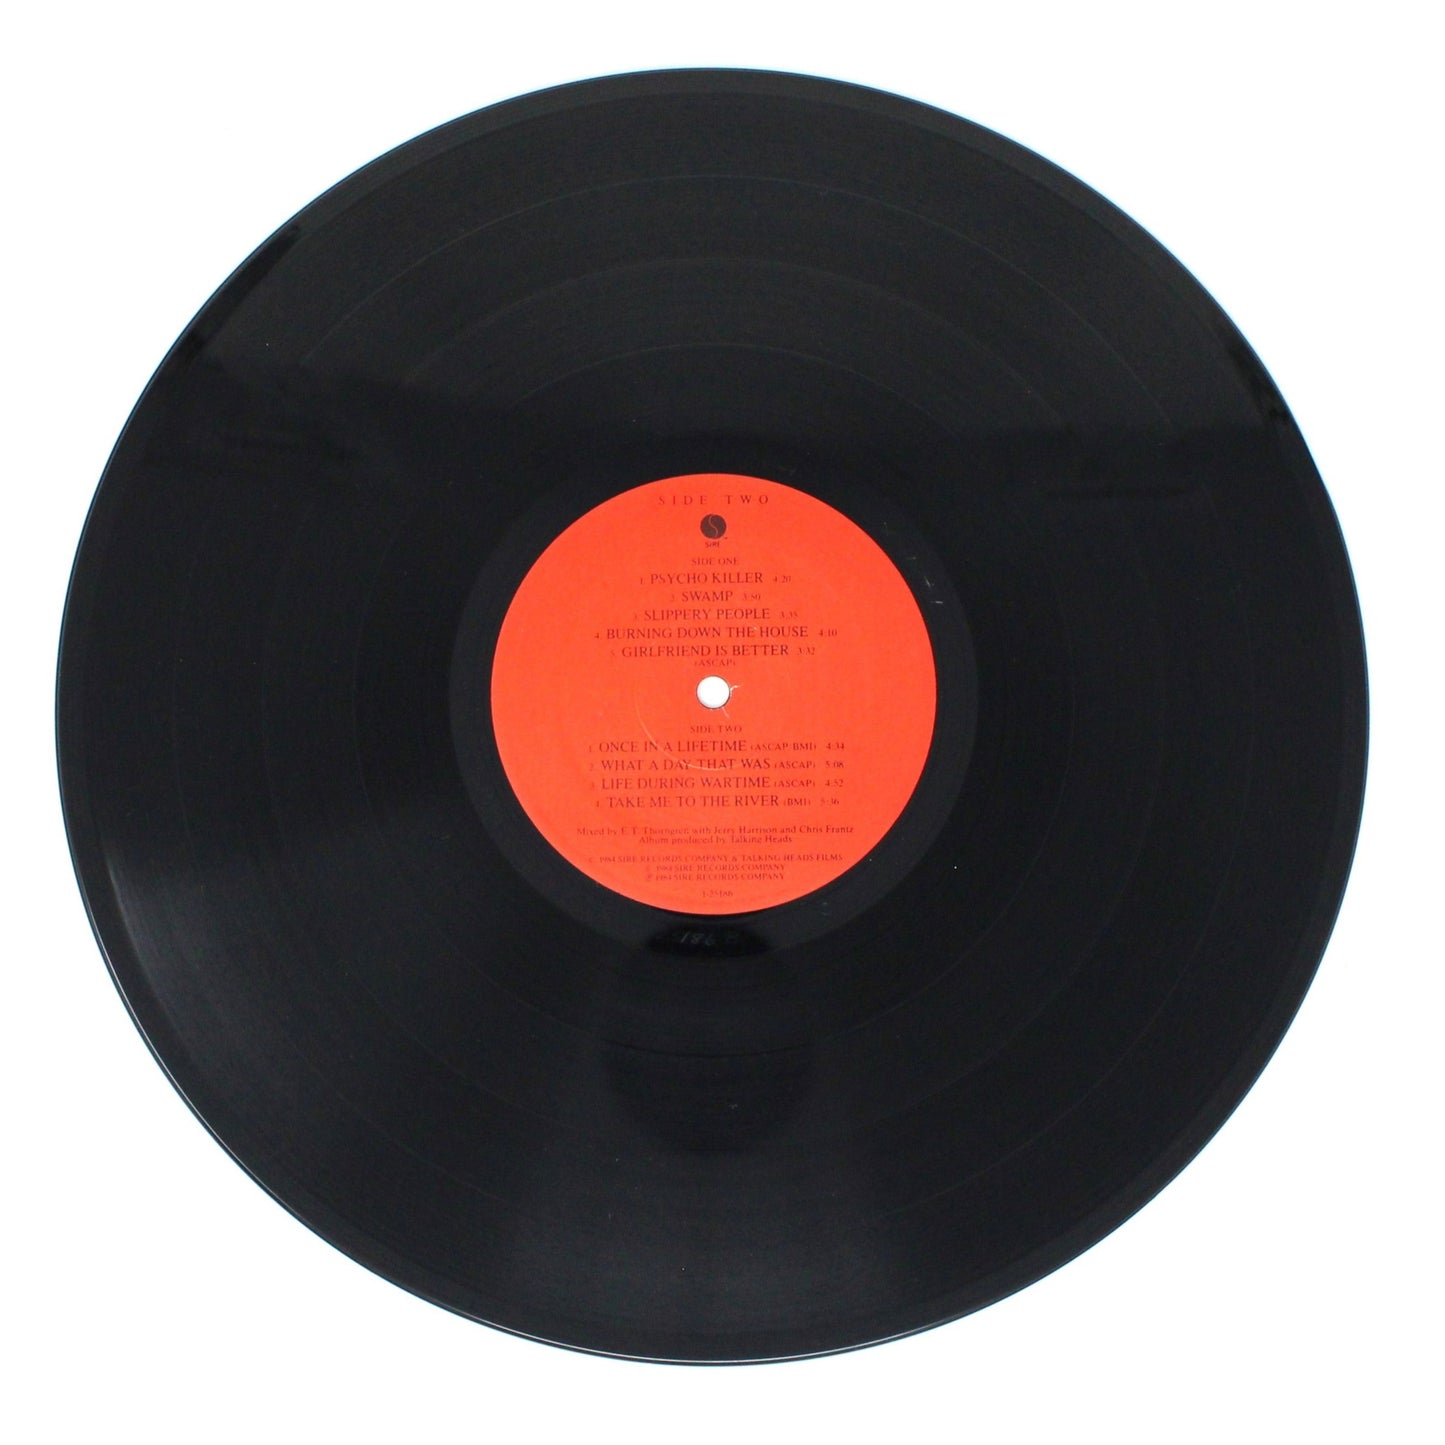 Record Album, Talking Heads, Stop Making Sense, Original 1984, Sire Records, Vintage VG+, SOLD